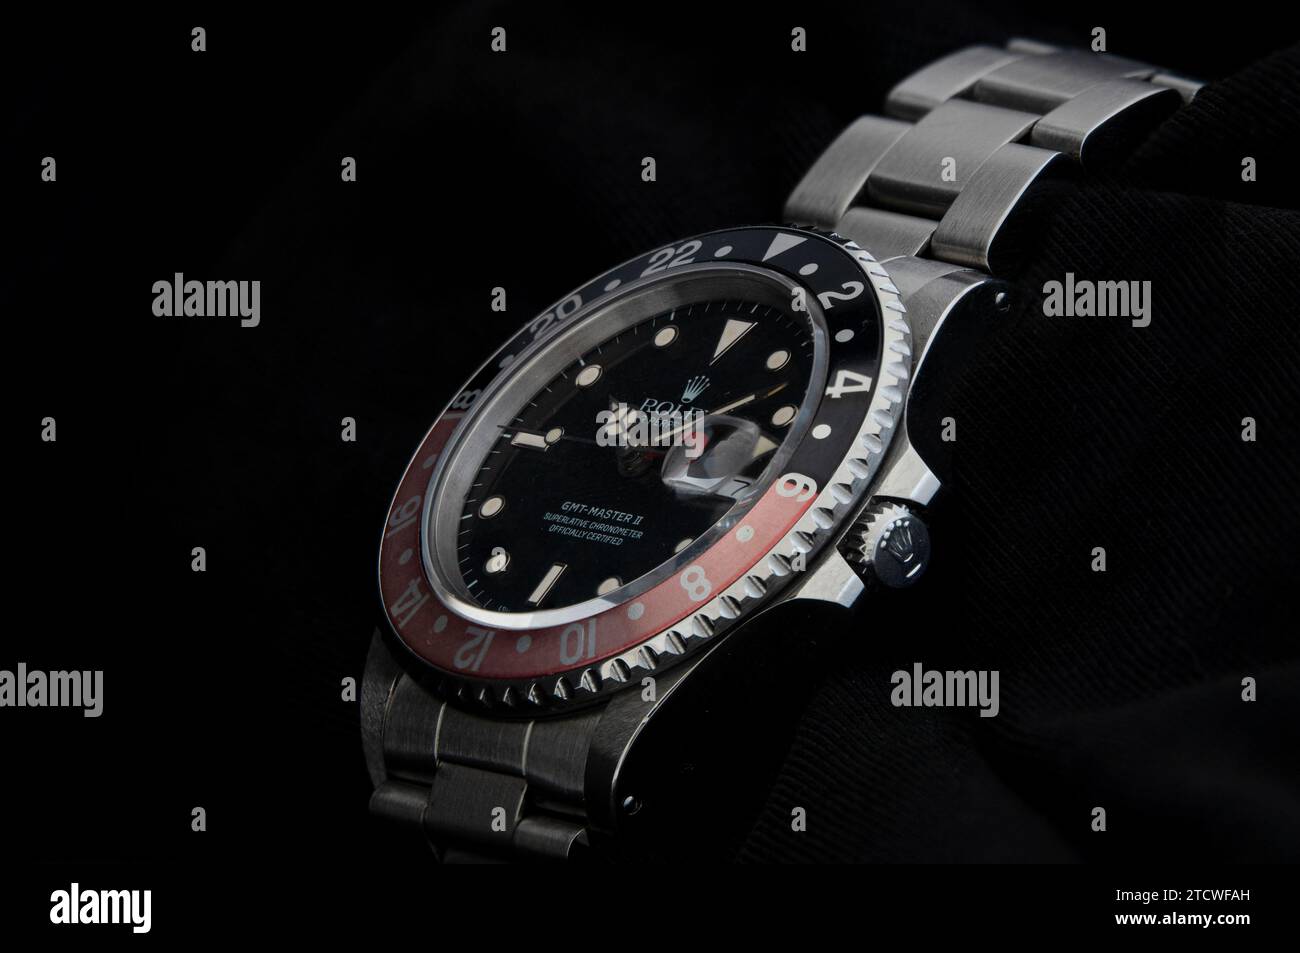 Rolex GMT Master II wristwatch from Rolex a Swiss watchmaker of luxury watches. Isolated on black background. Copenhagen, Denmark - September 20, 2023 Stock Photo